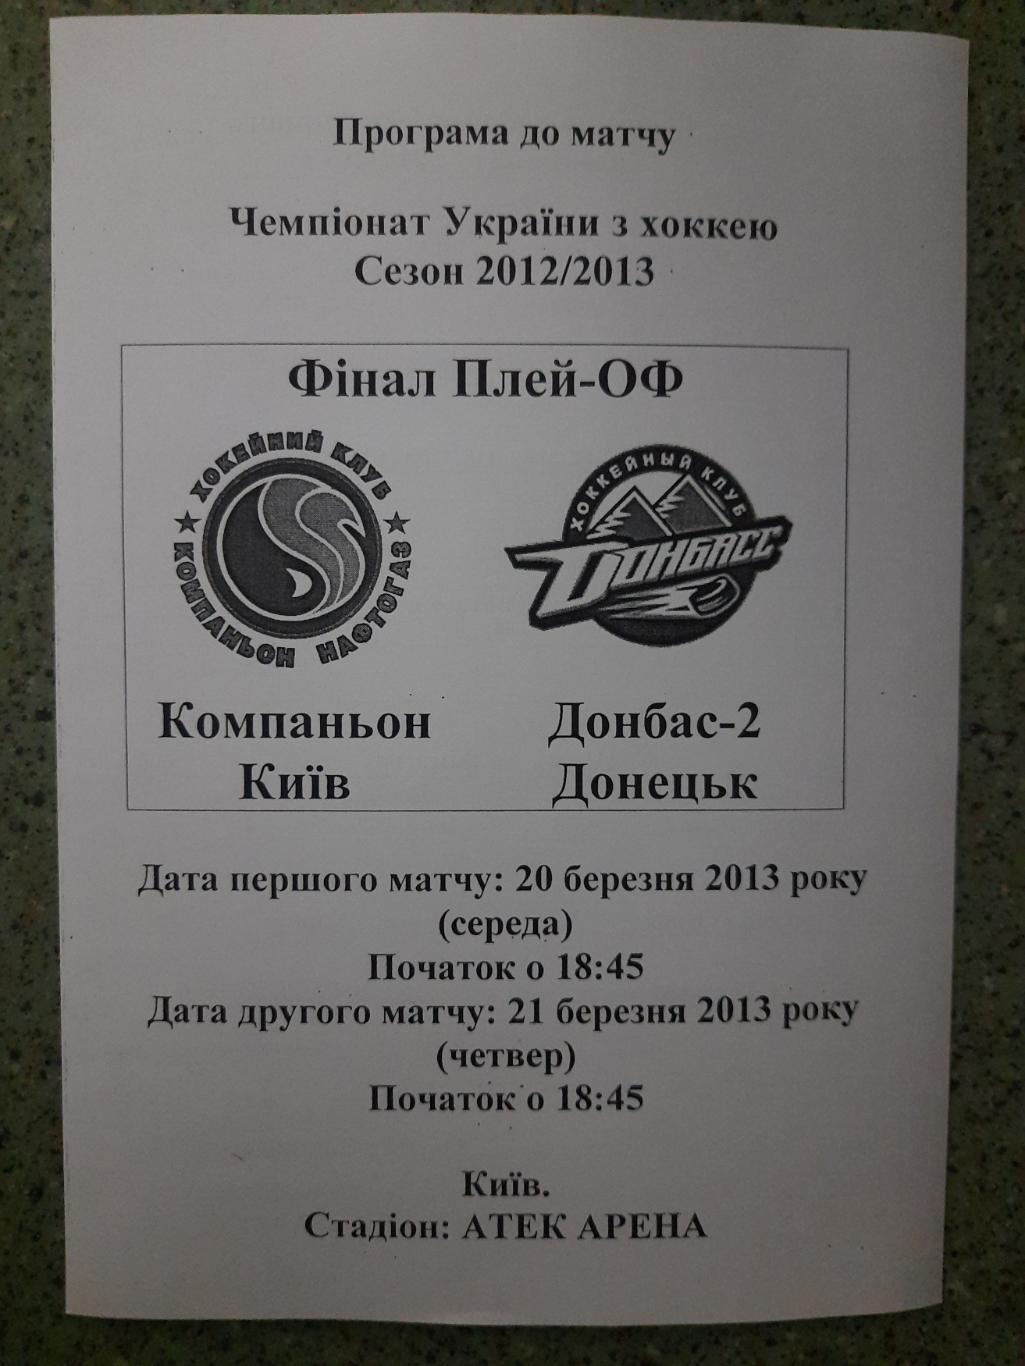 ХК Компаньон Киев - ХК Донбасс-2 Донецк 20-21.03.2013,финал.